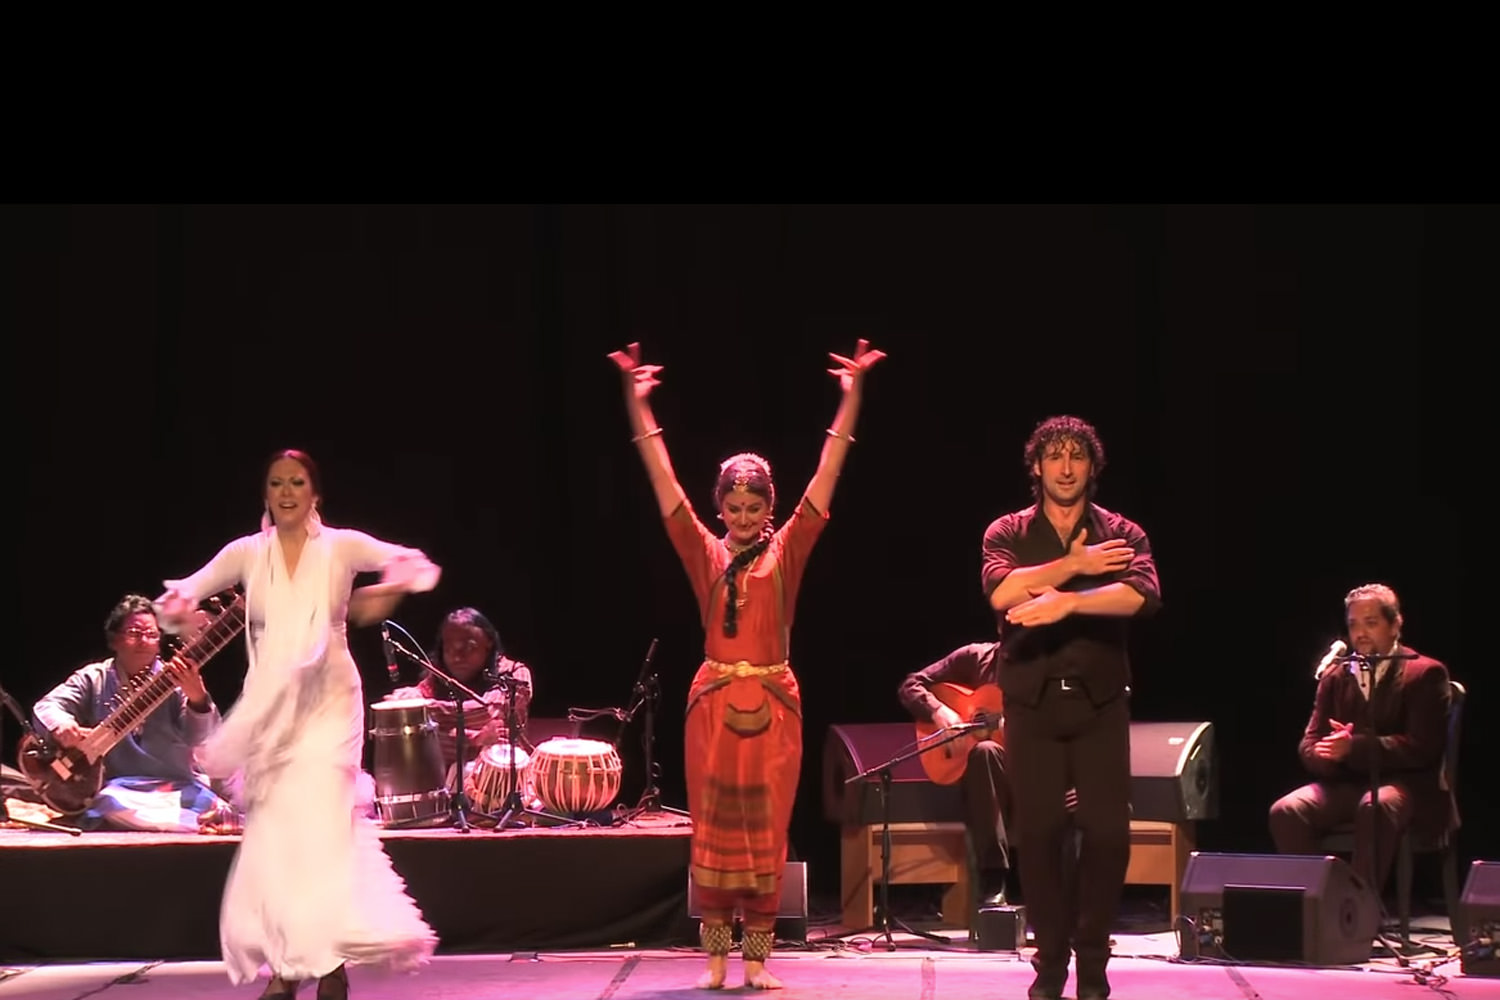 Espectáculo colaboración de flamenco